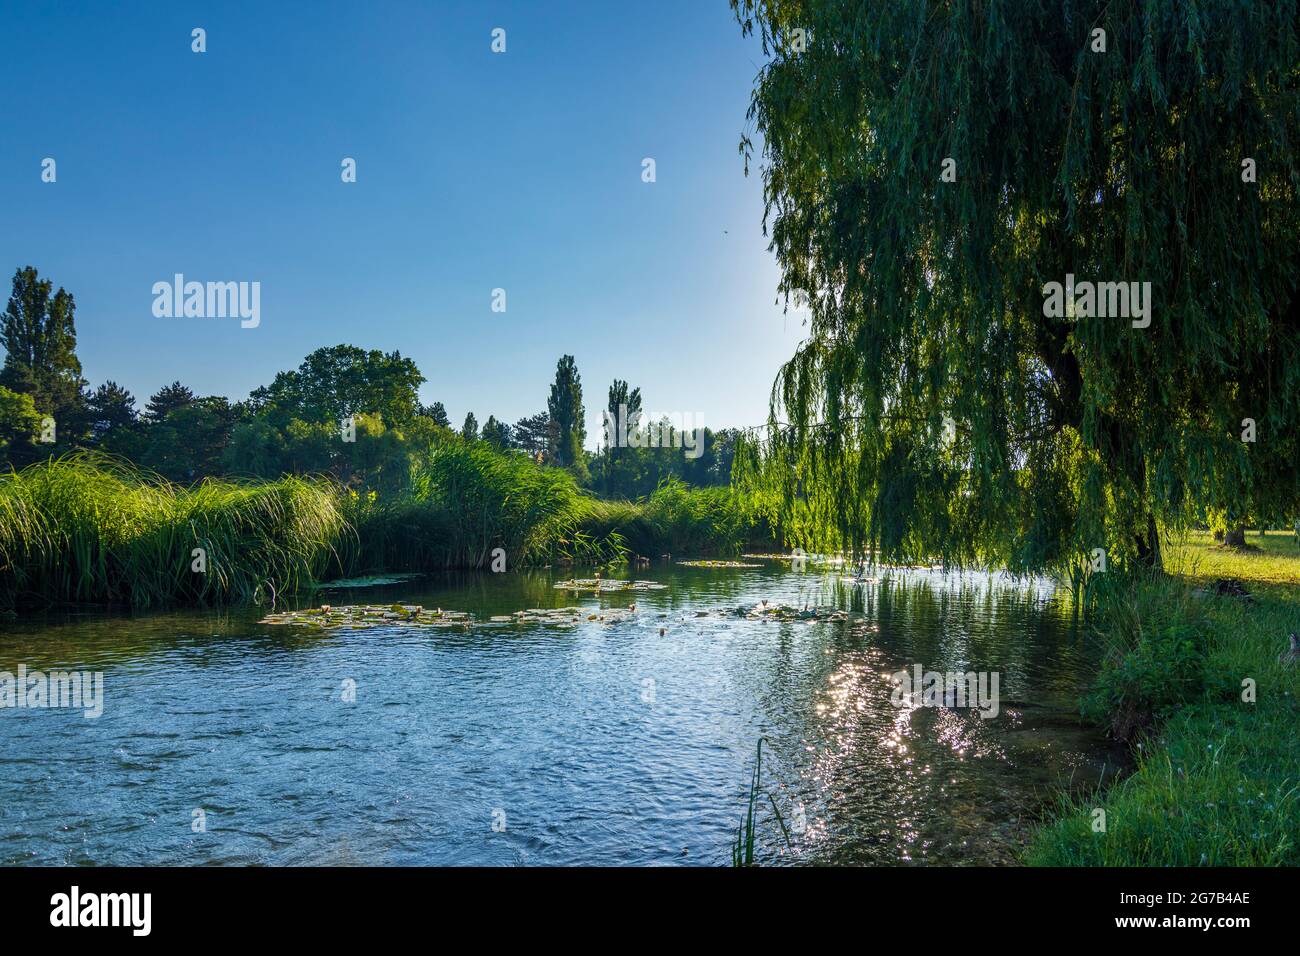 Vienna, park Wasserpark, pond of Biologischer Bodenfilter Alte Donau (biological soil filter Old Danube) in 21. Floridsdorf, Wien, Austria Stock Photo